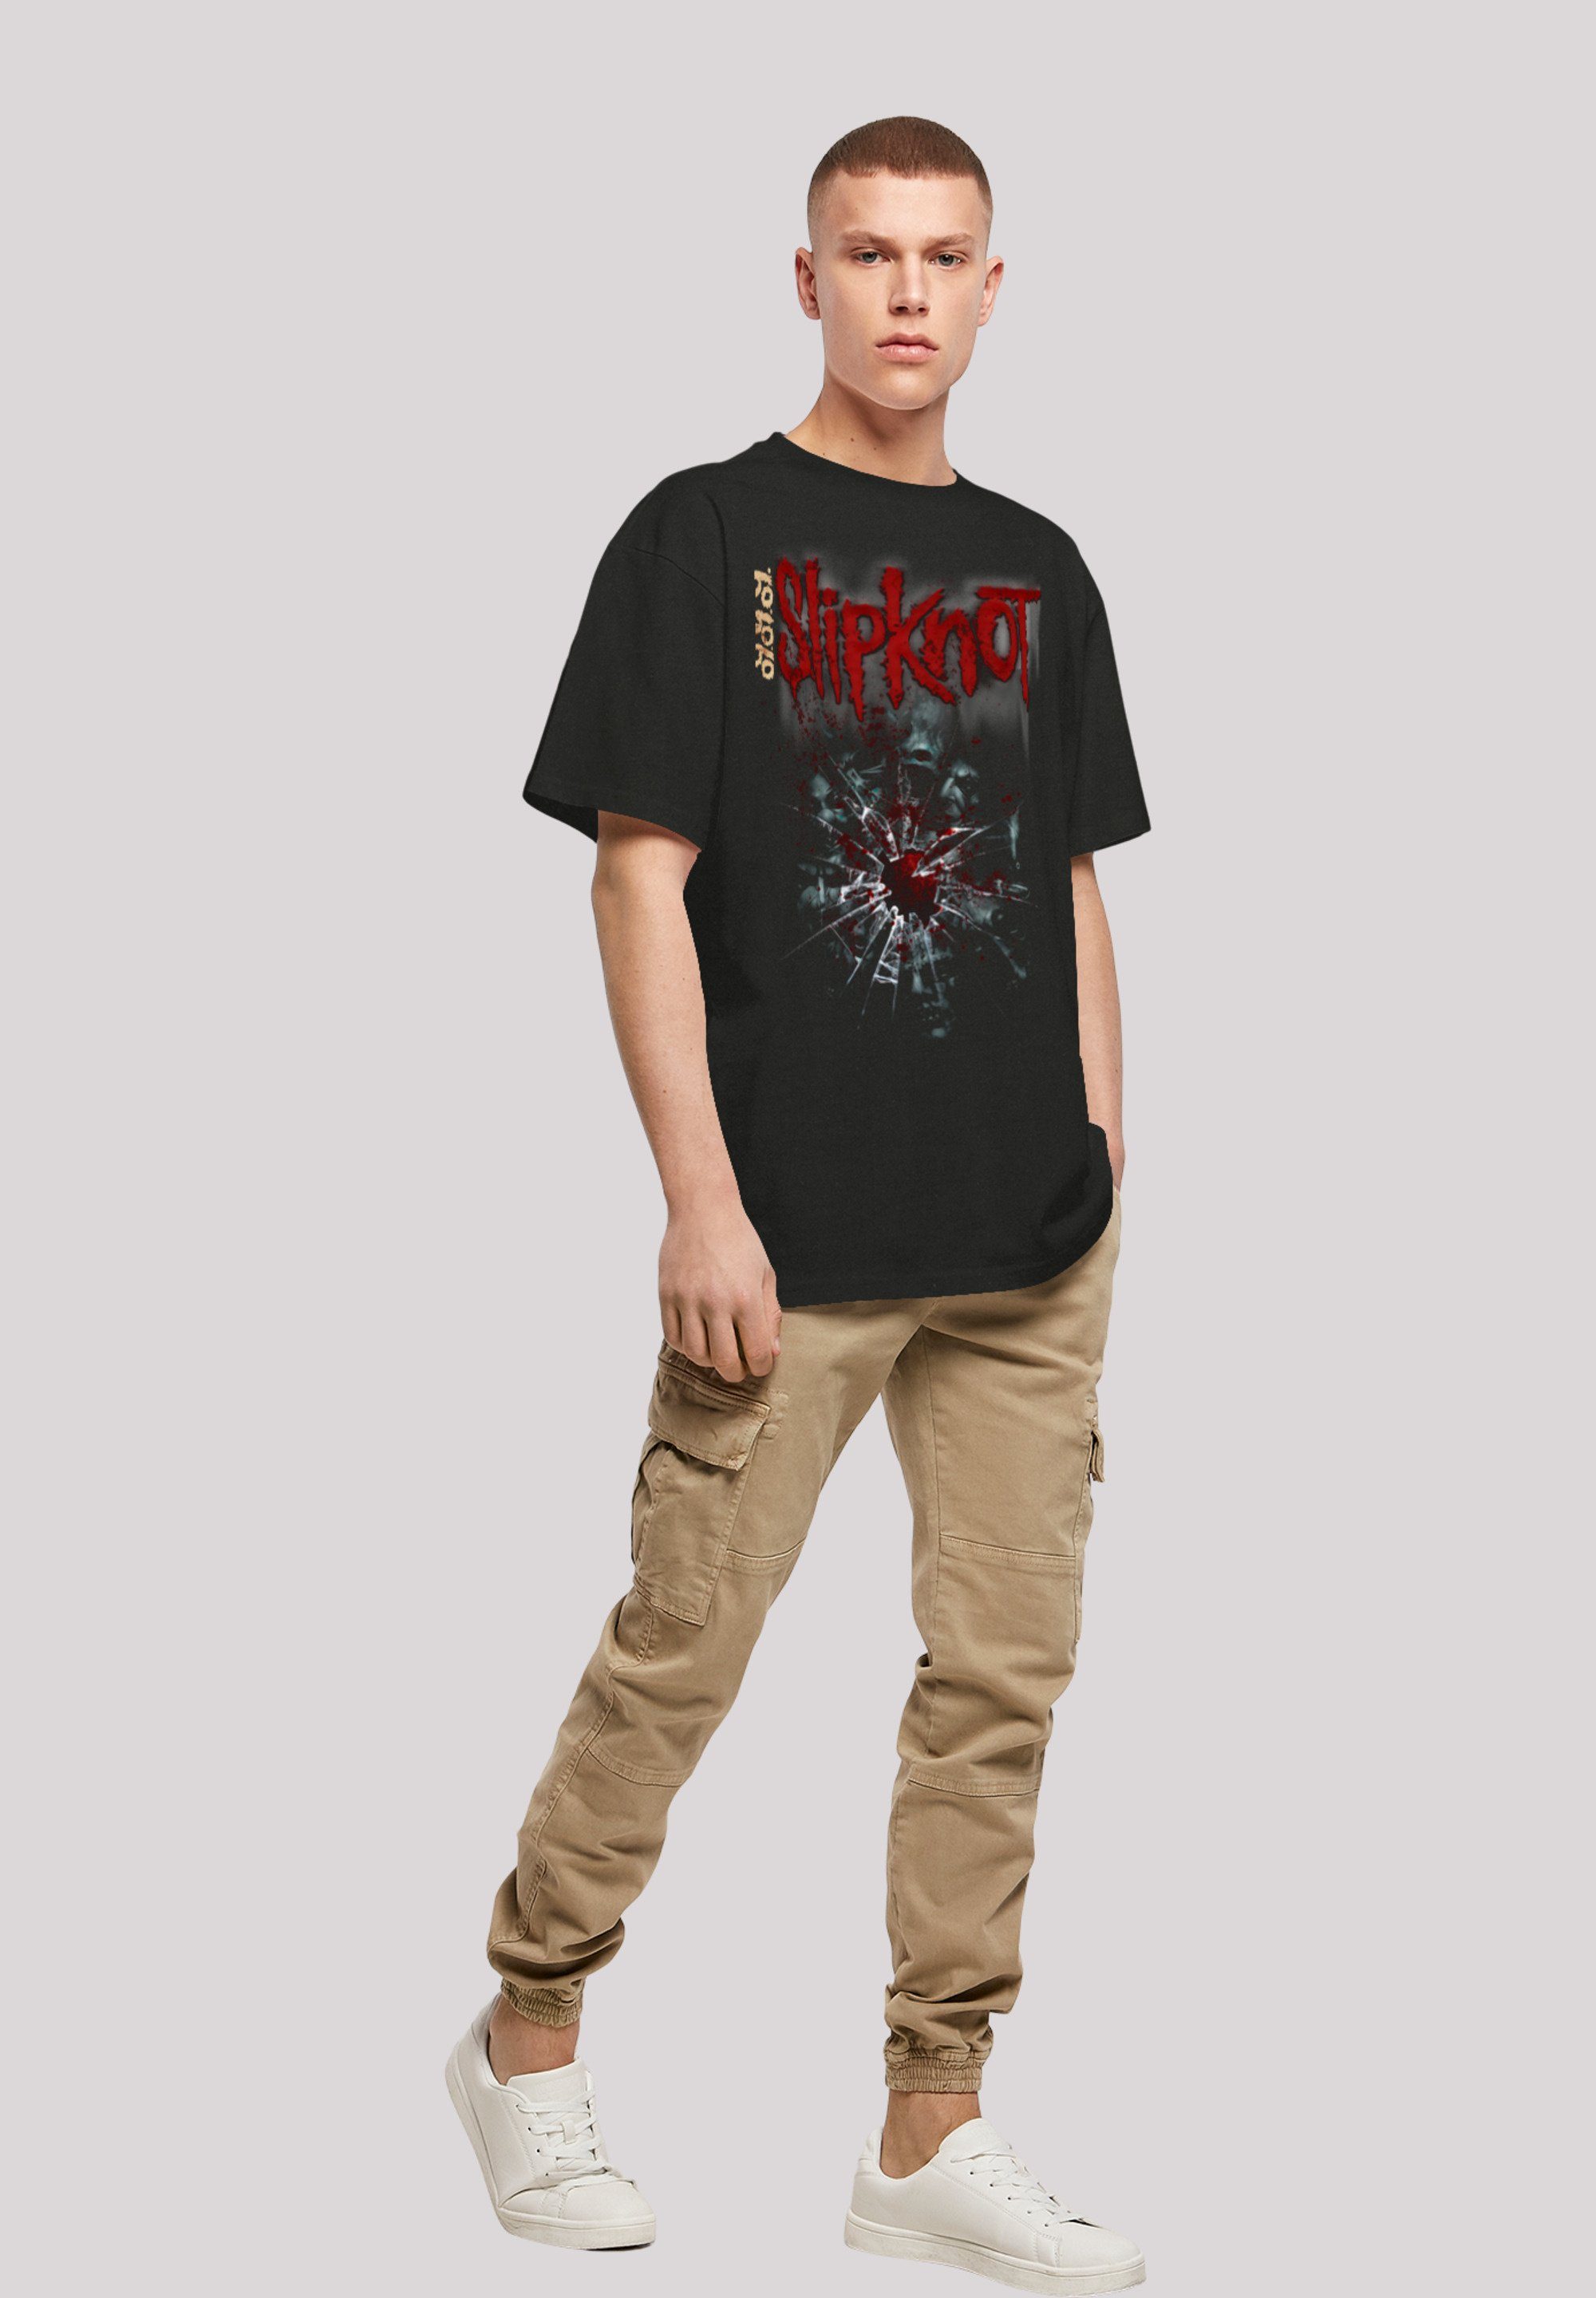 T-Shirt Band F4NT4STIC Print Metal Slipknot